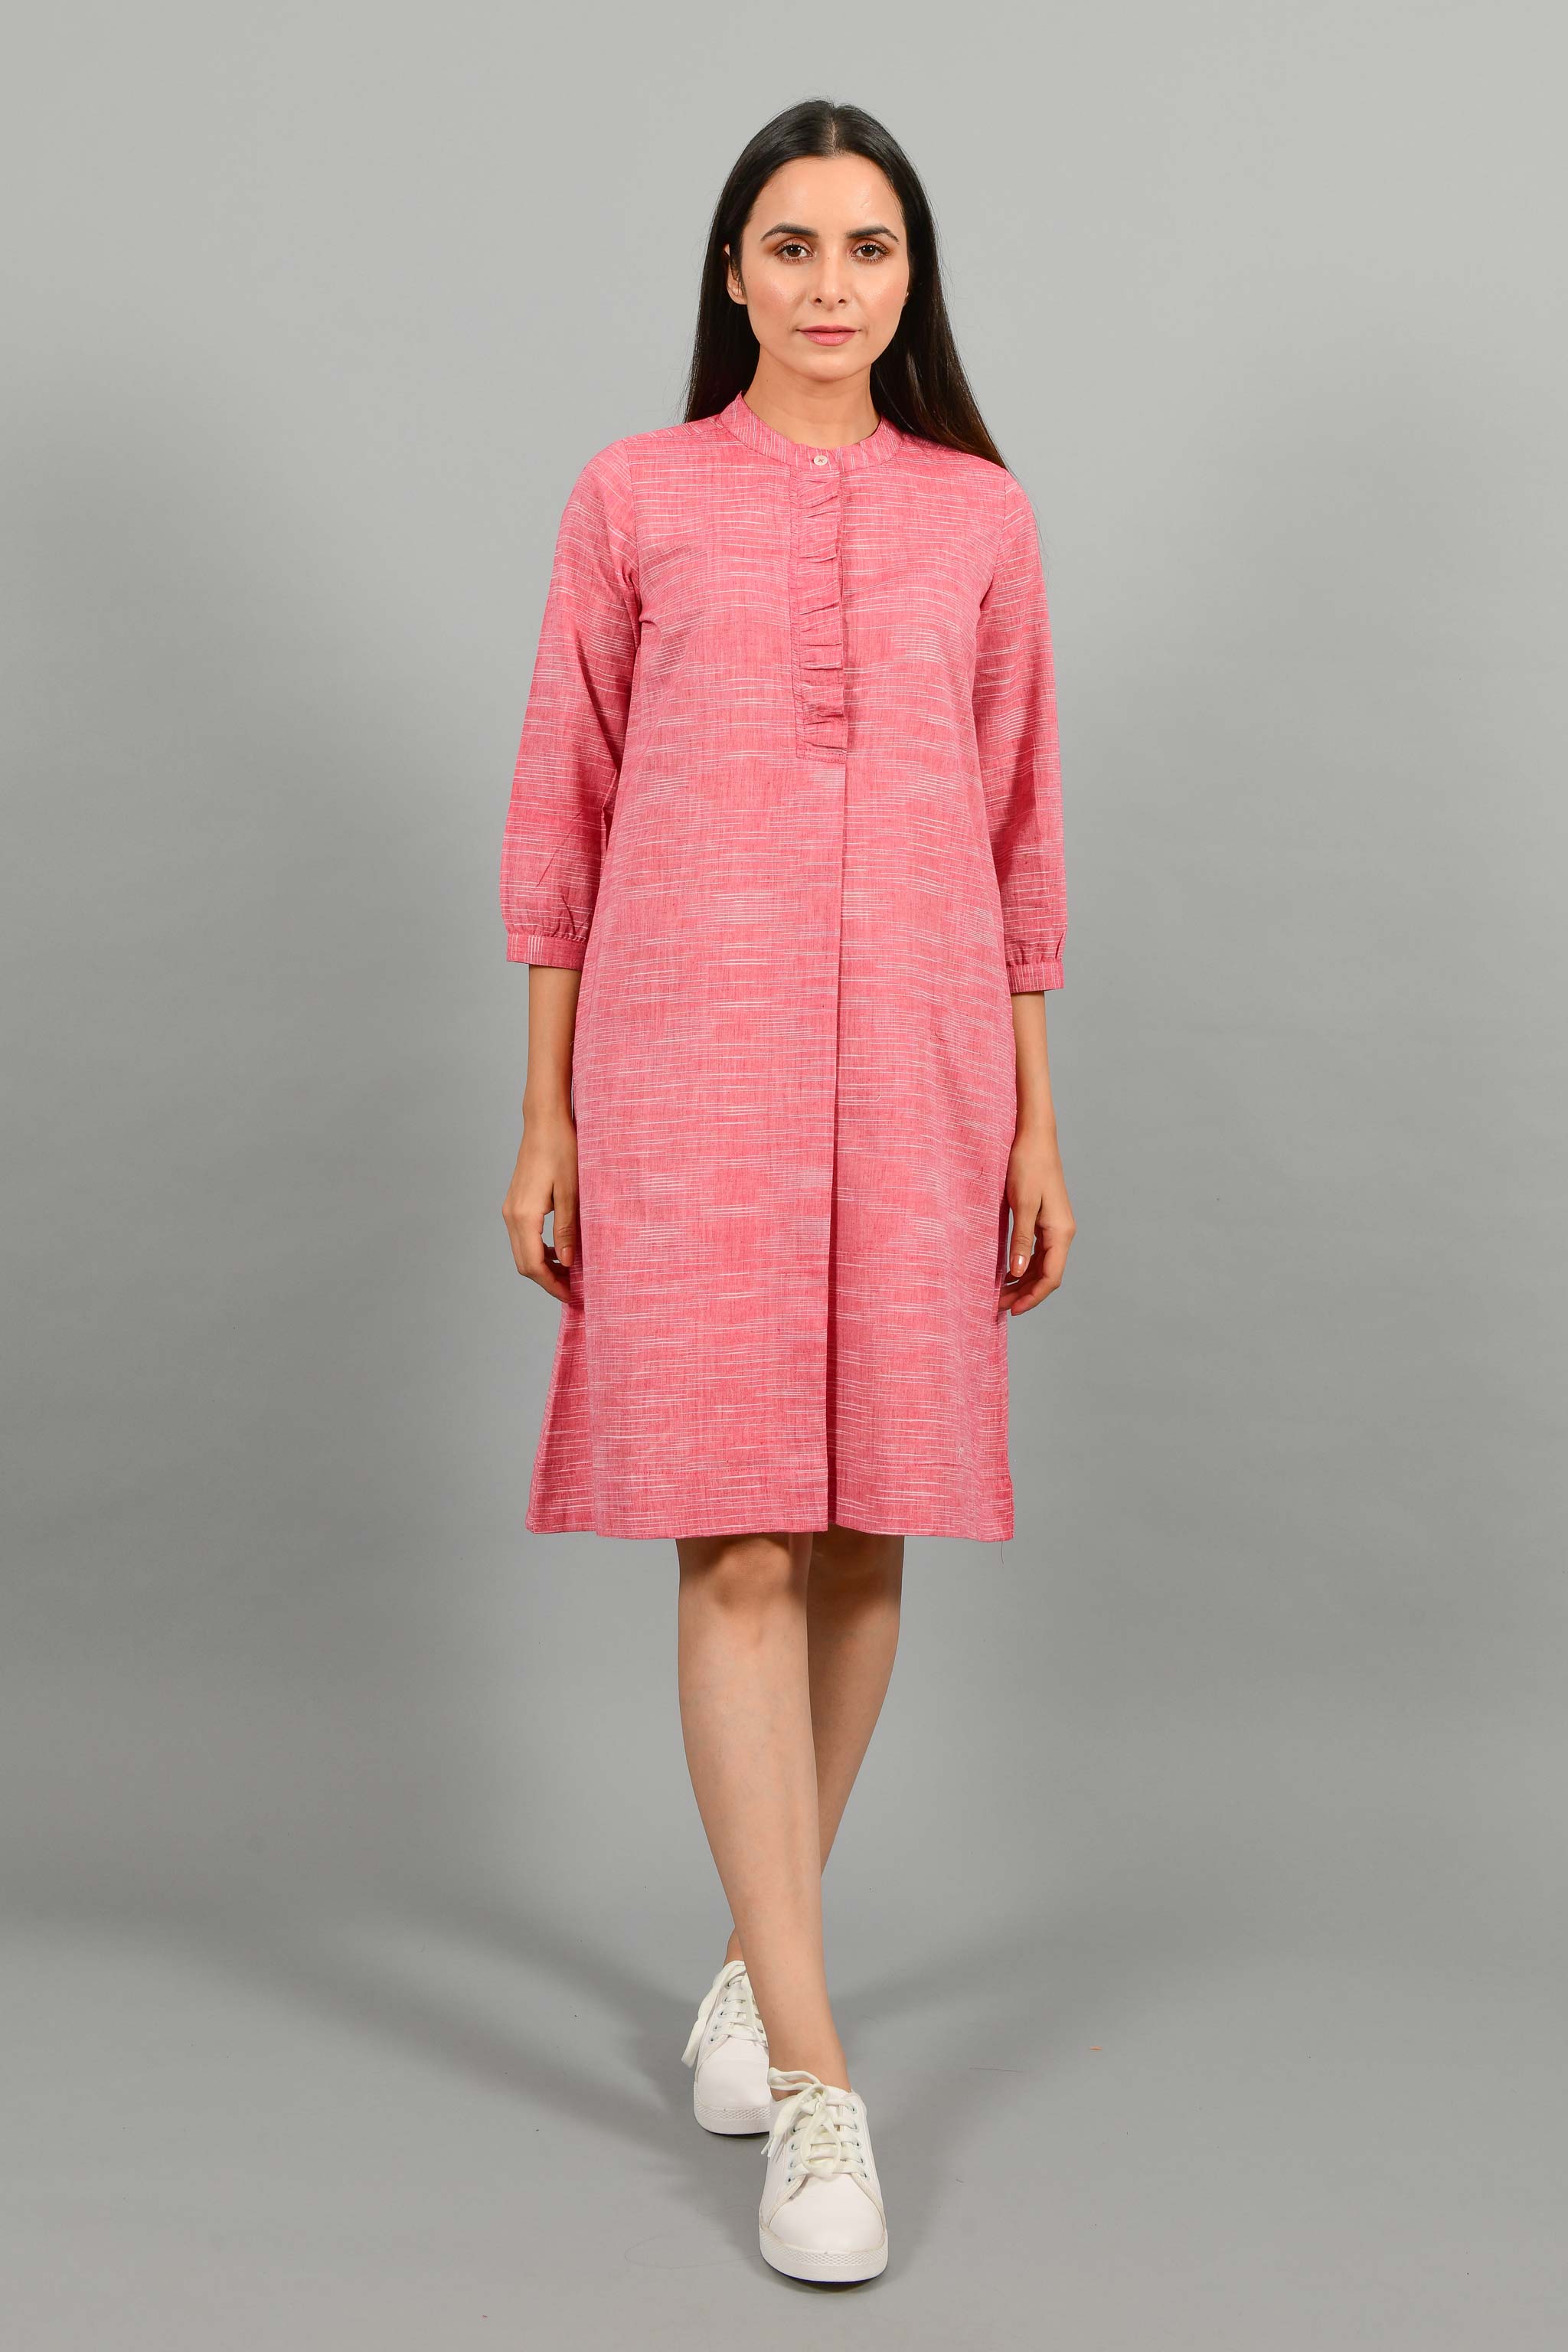 Best Cotton Dresses on Amazon | POPSUGAR Fashion